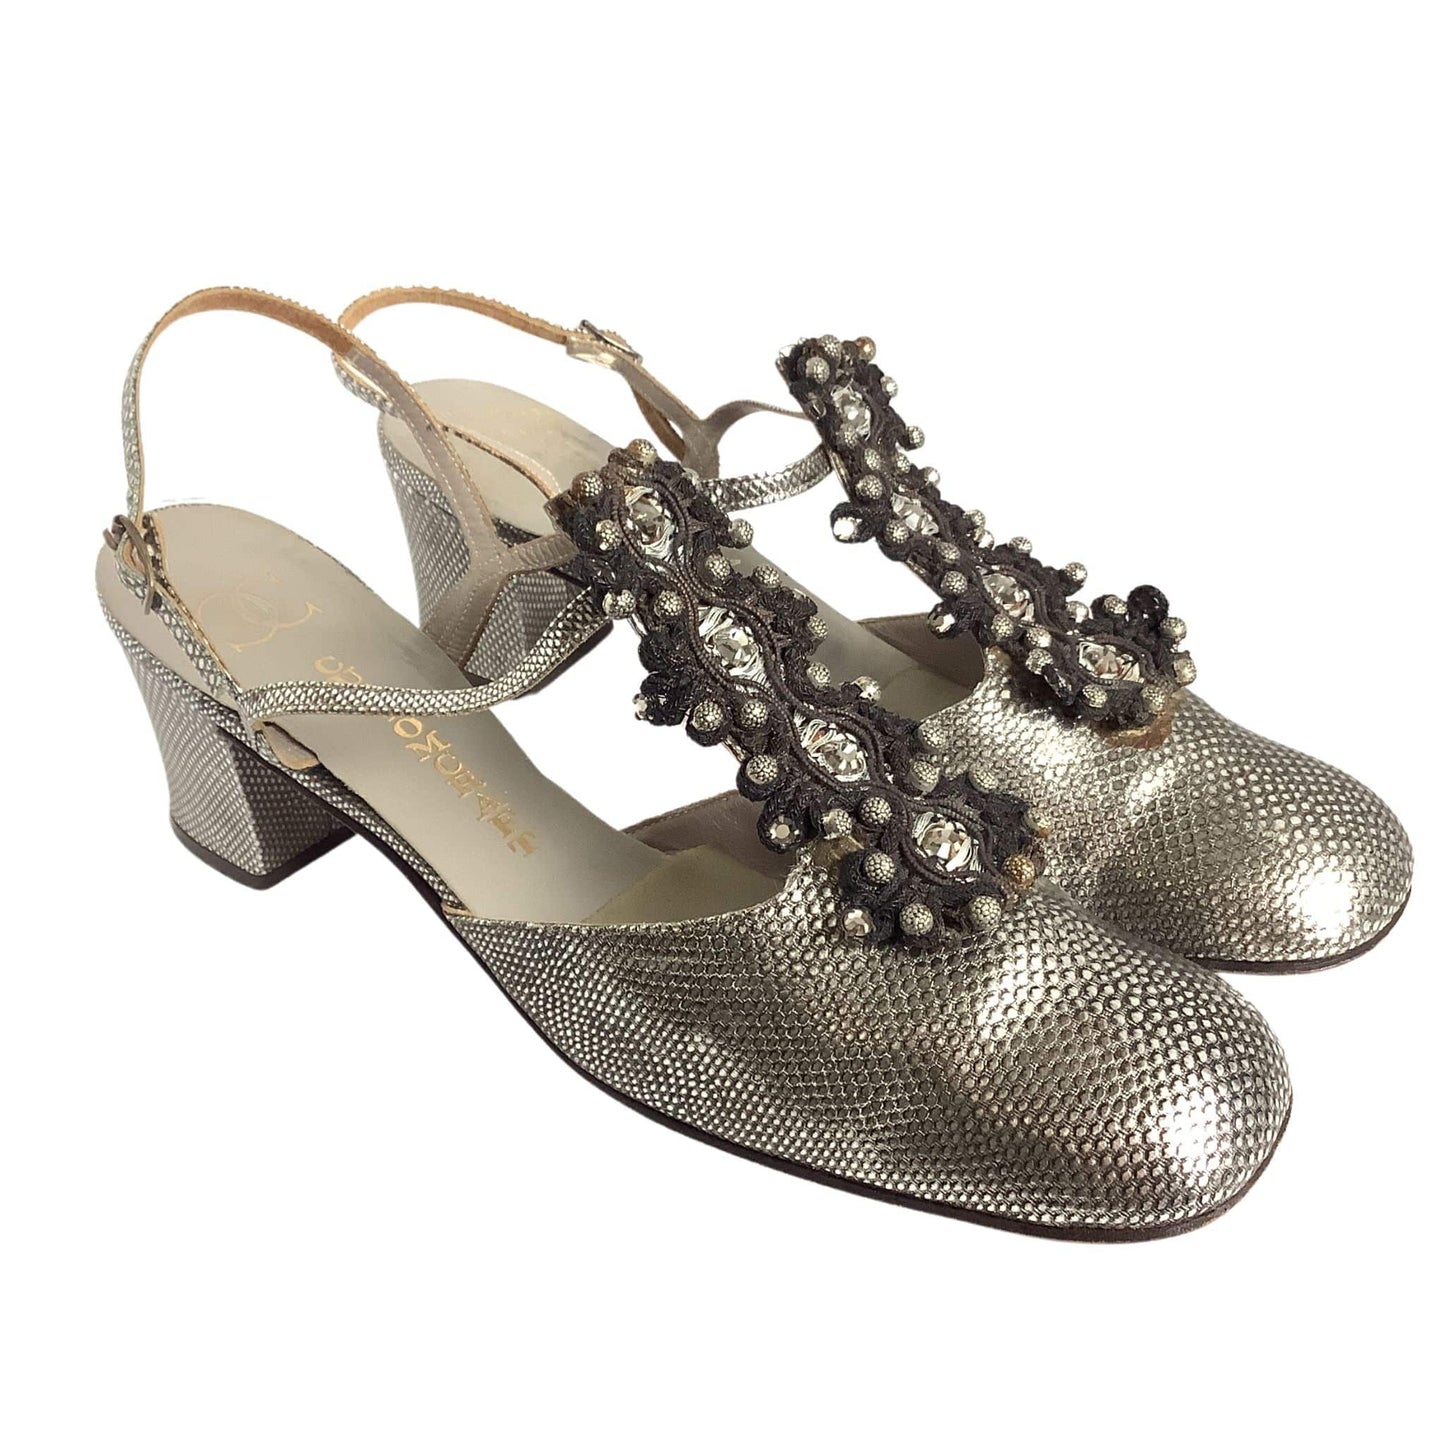 Customcraft Silver Heels 8 / Silver / Vintage 1960s